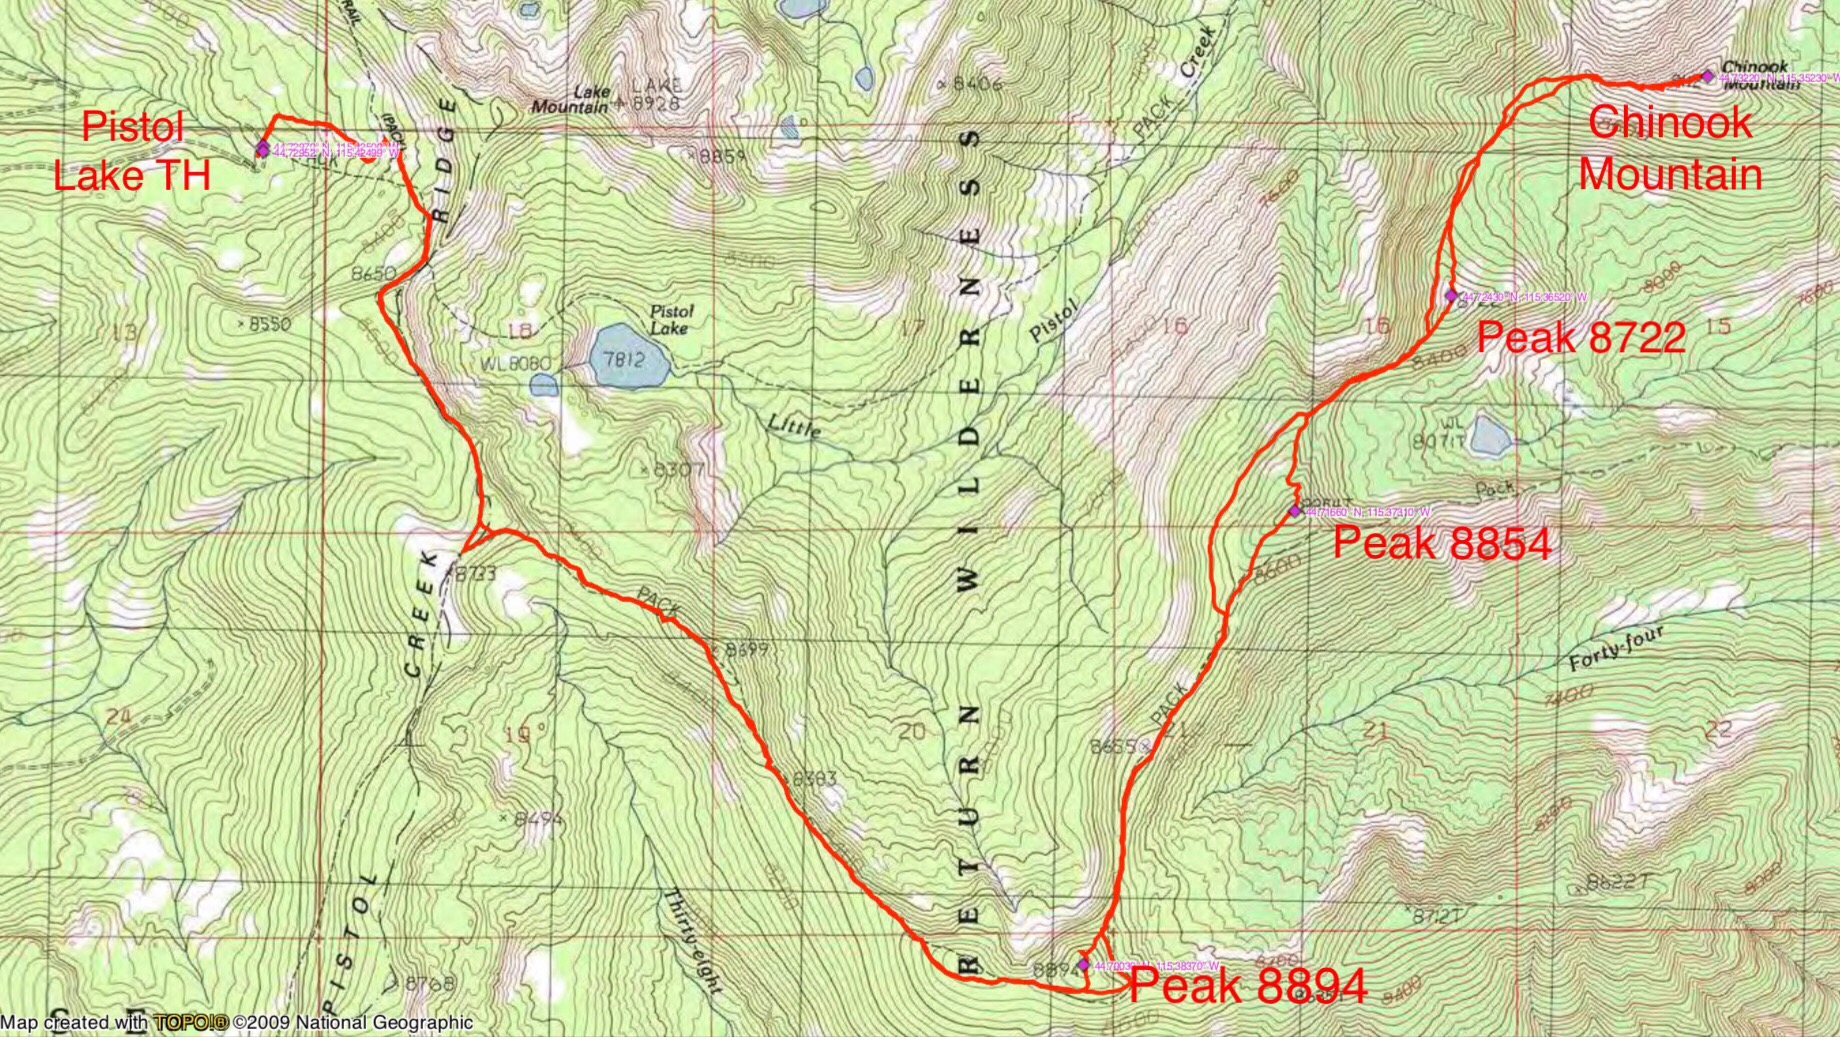 John Platt’s GPS track of the traverse to Chinook Mountain.